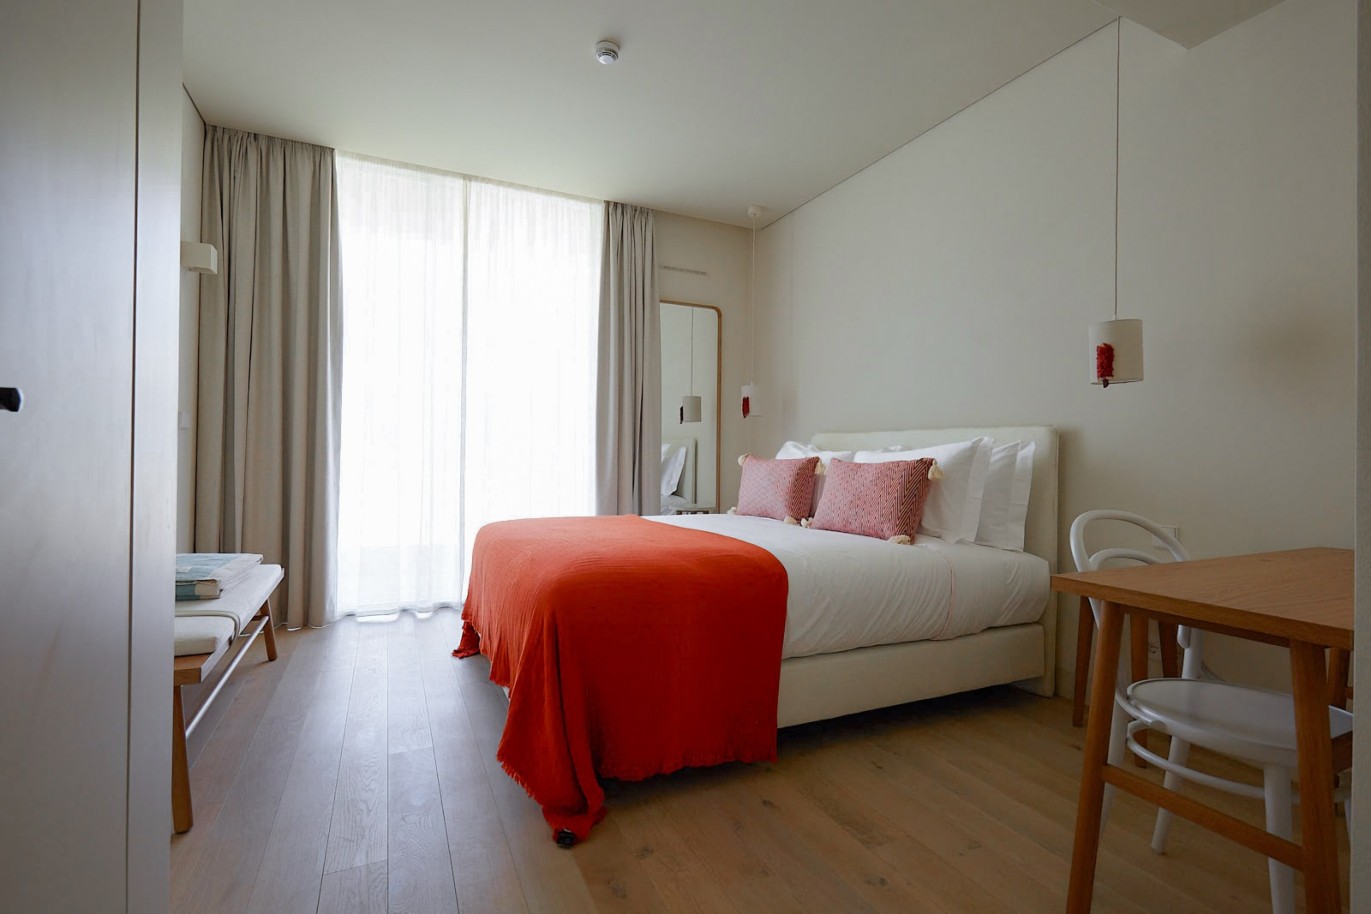 2 bedroom apartment in resort, for sale in Porches, Algarve_229071